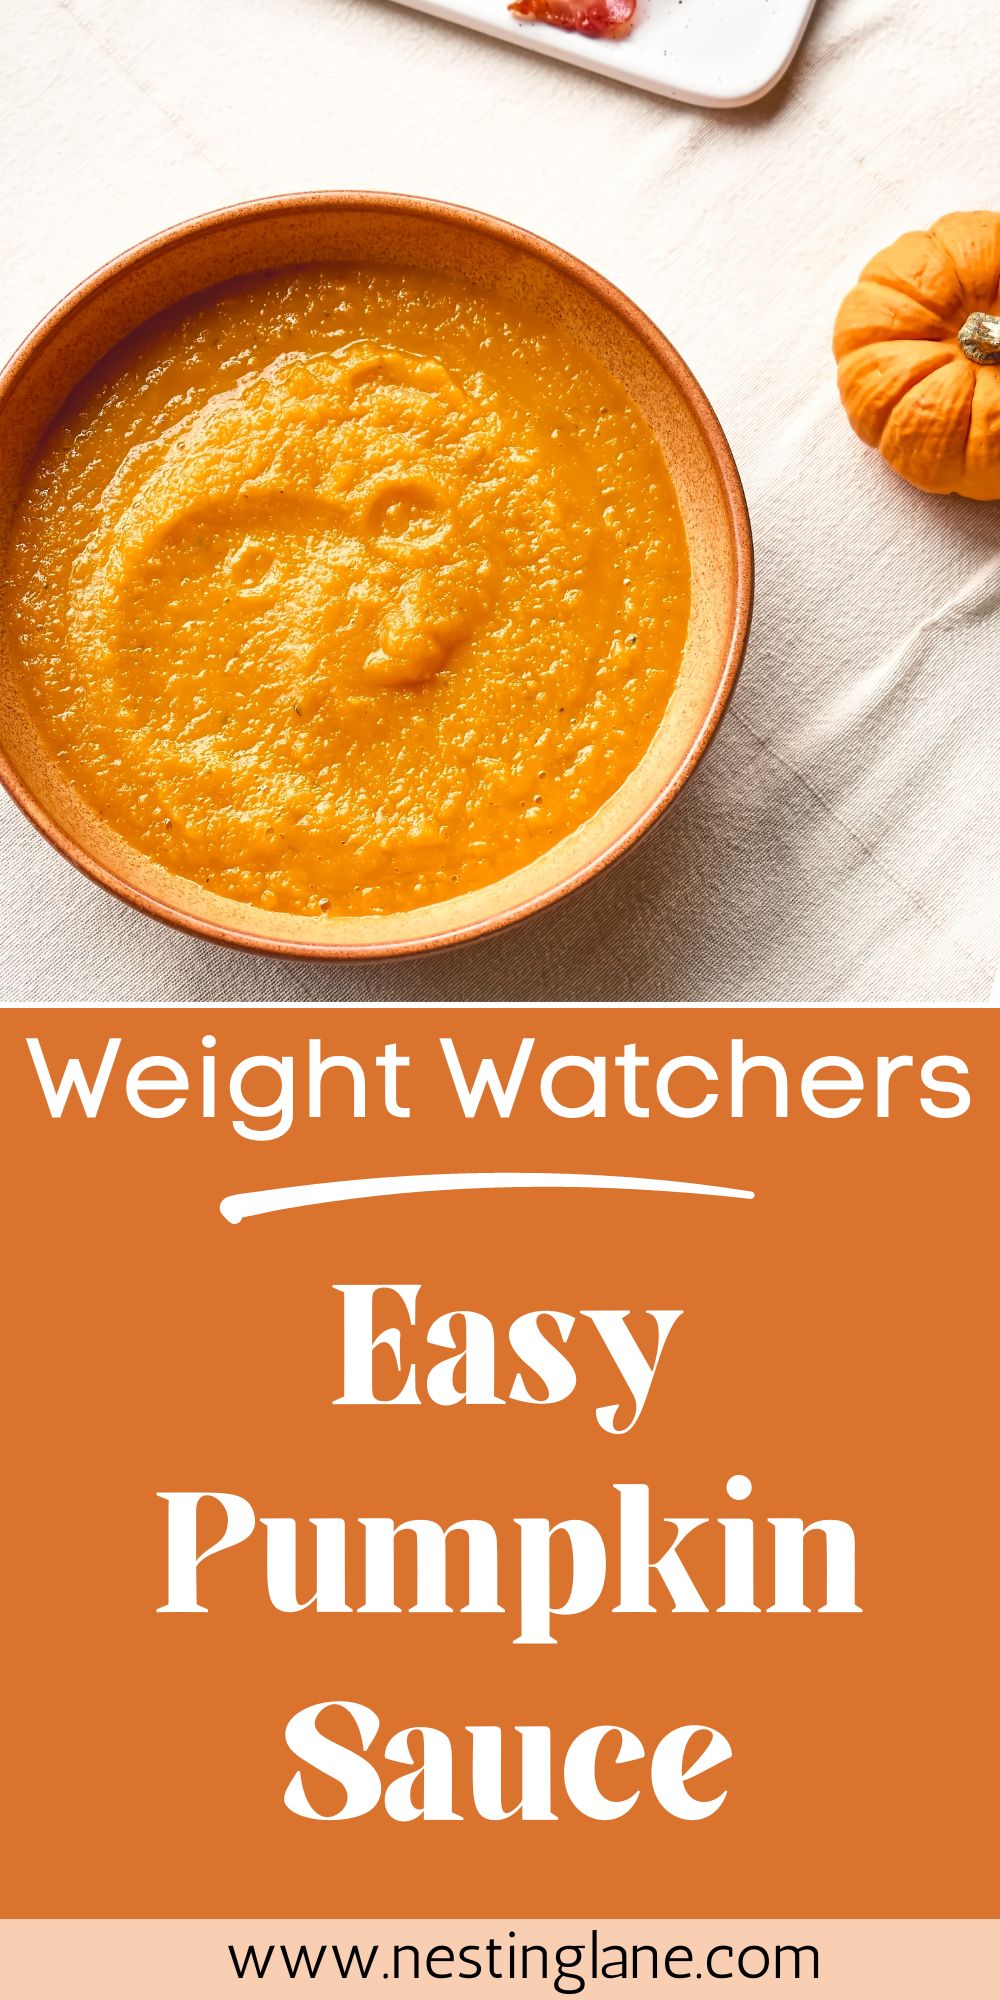 Graphic for Pinterest of Easy Weight Watchers Pumpkin Sauce Recipe.